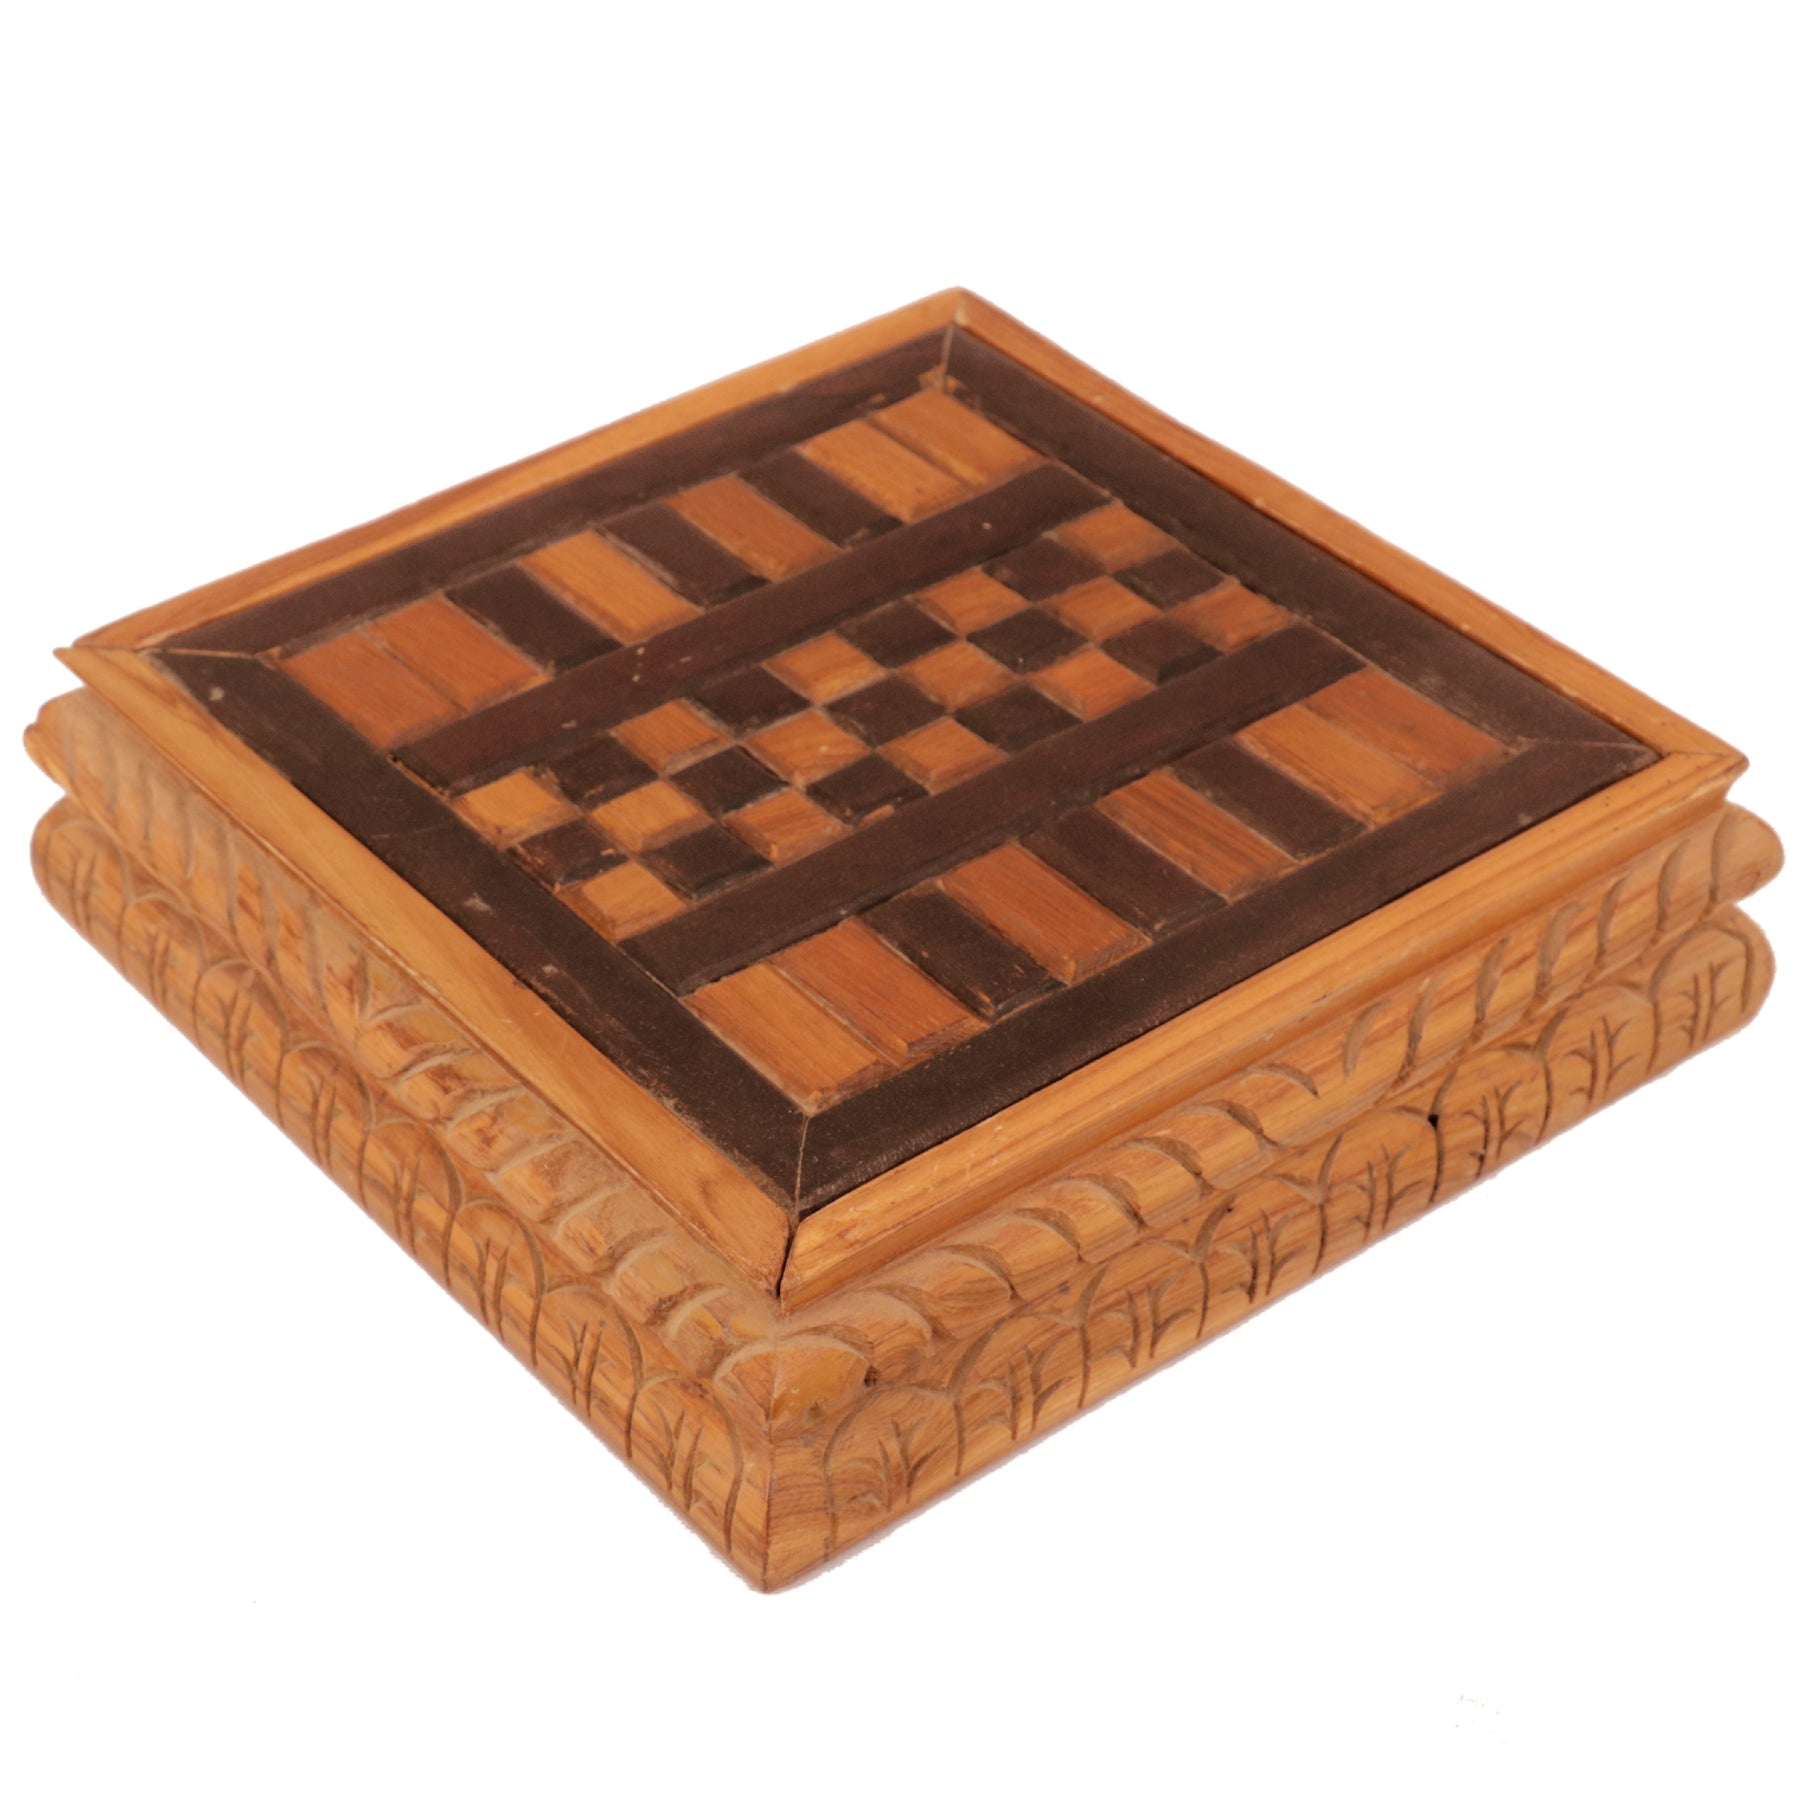 Chessboard Panel Box Wooden Box